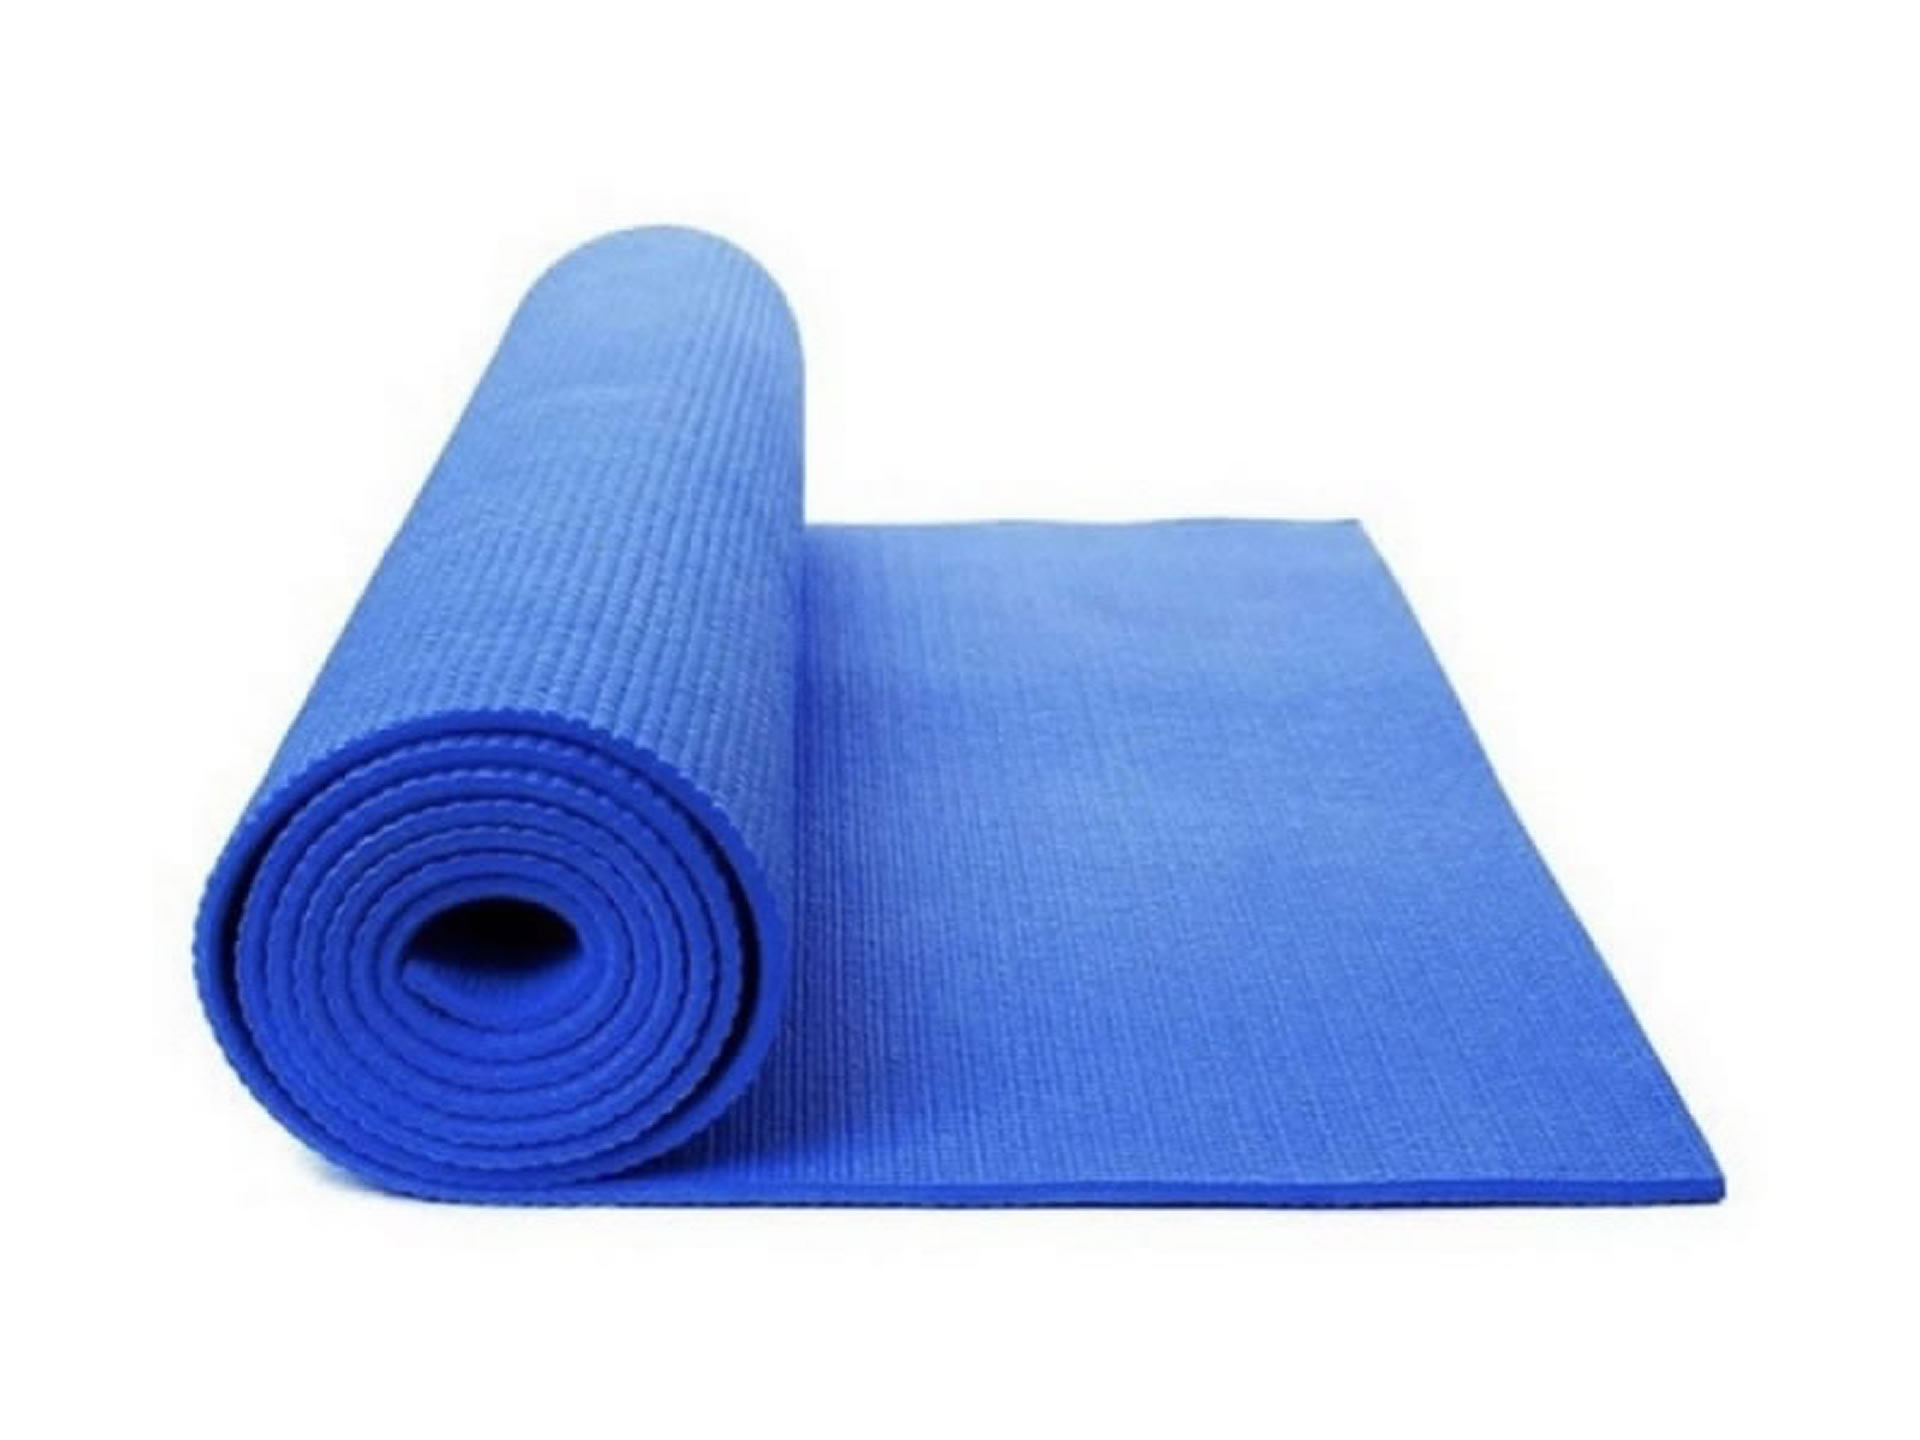 BNIB YogaPaws Elite Size 1 (Blue), Sports Equipment, Exercise